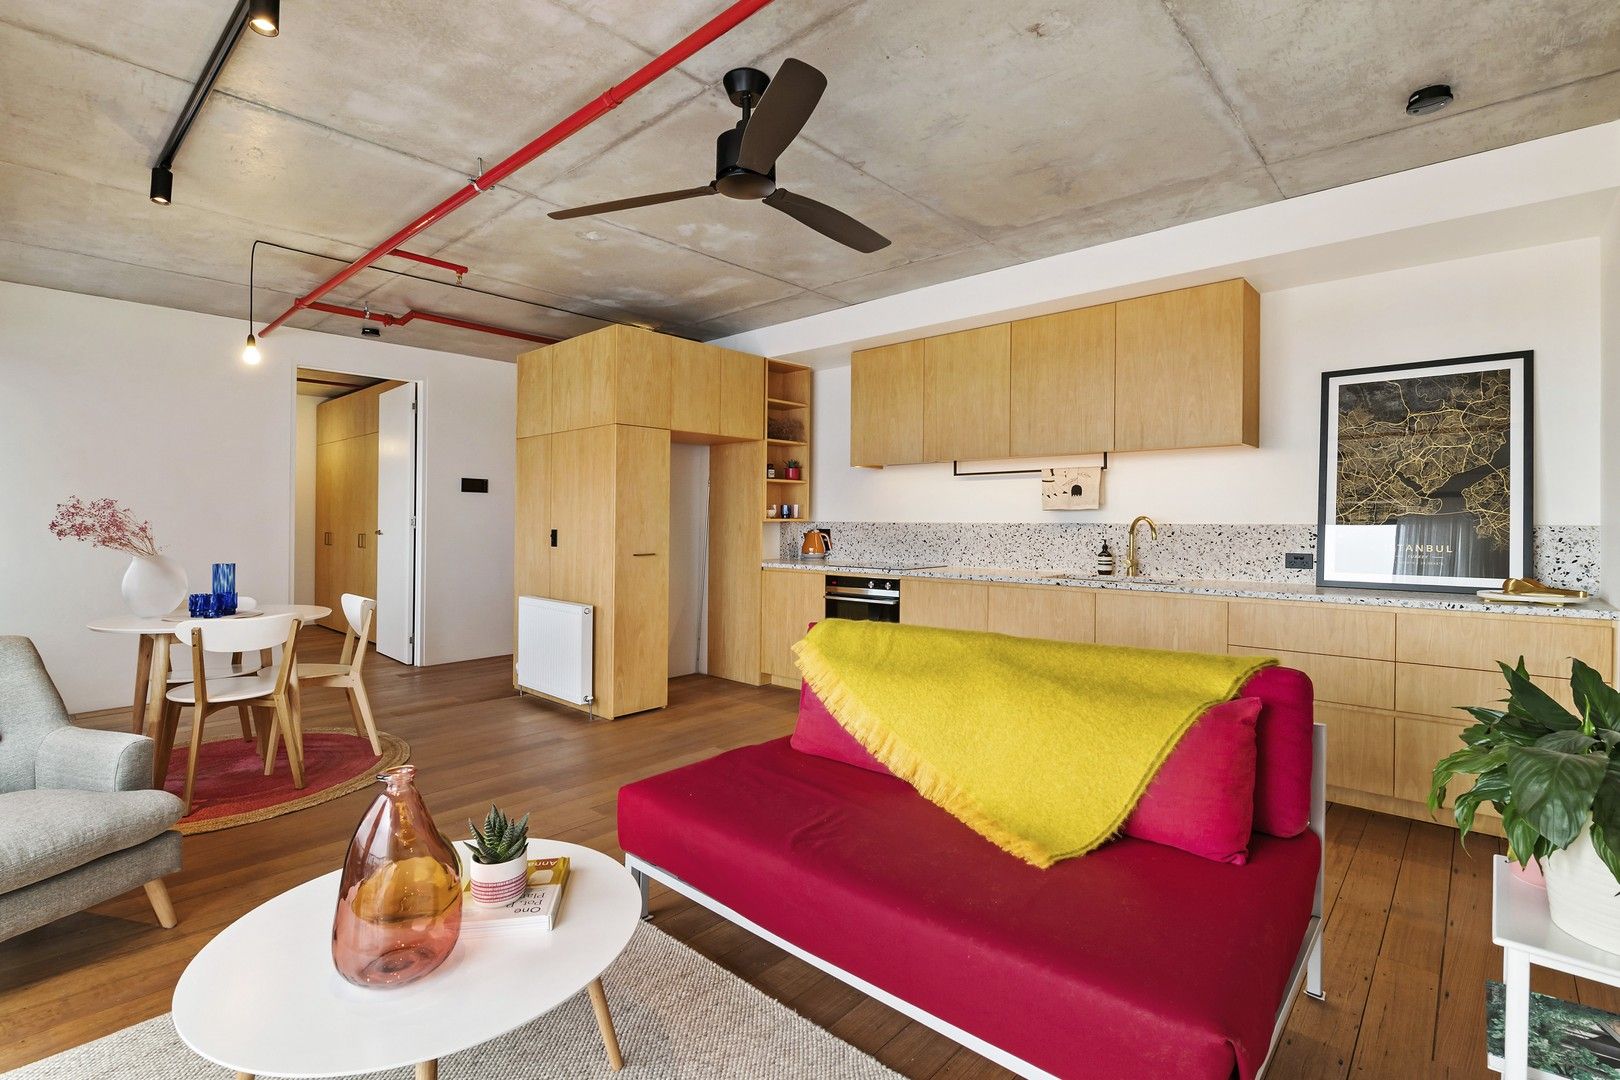 2 bedrooms Apartment / Unit / Flat in 503/216 Albion Street BRUNSWICK VIC, 3056